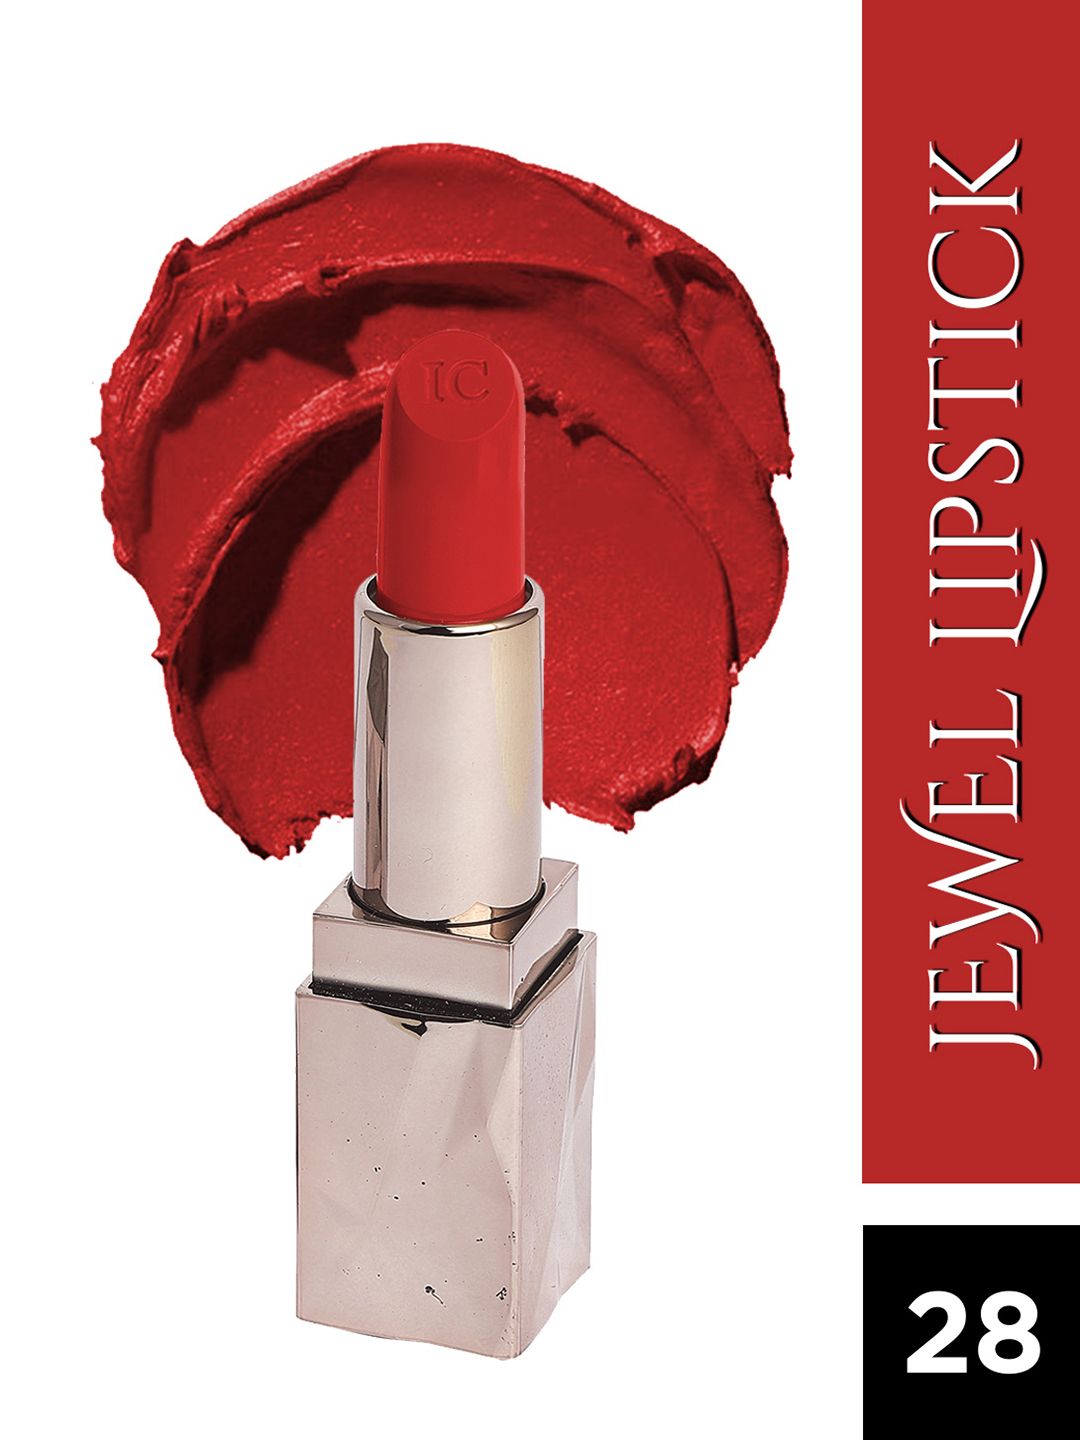 Incolor Jewel Queen Lipstick 28 Price in India